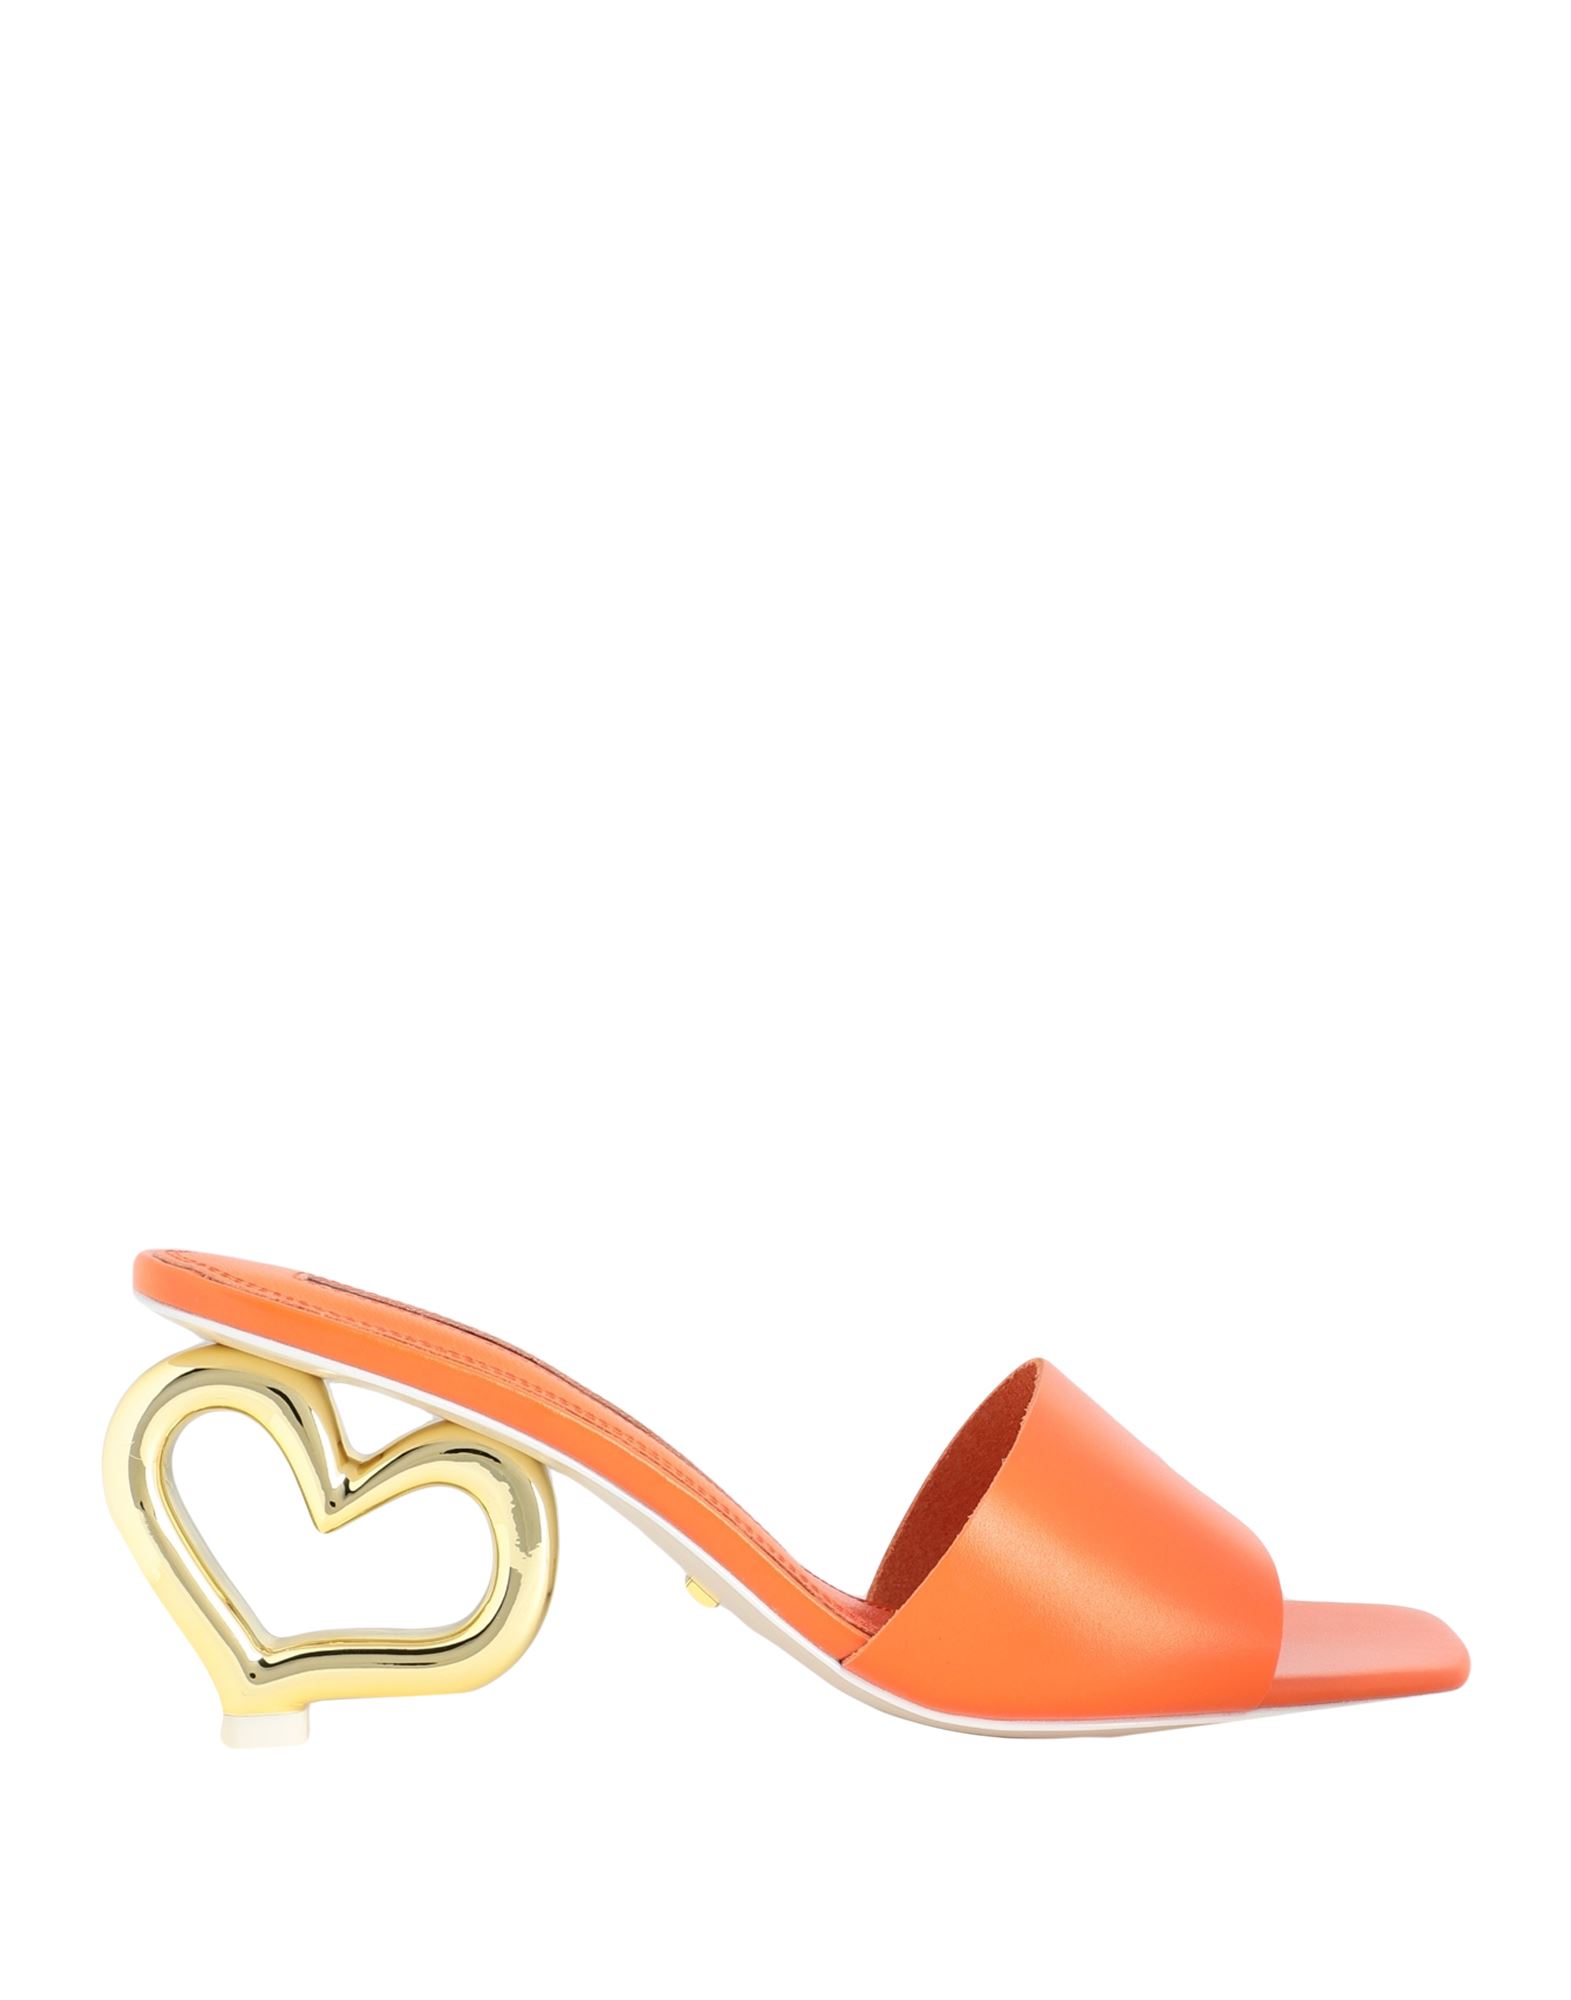 Shop Kat Maconie Chichi Woman Sandals Orange Size 6 Bovine Leather